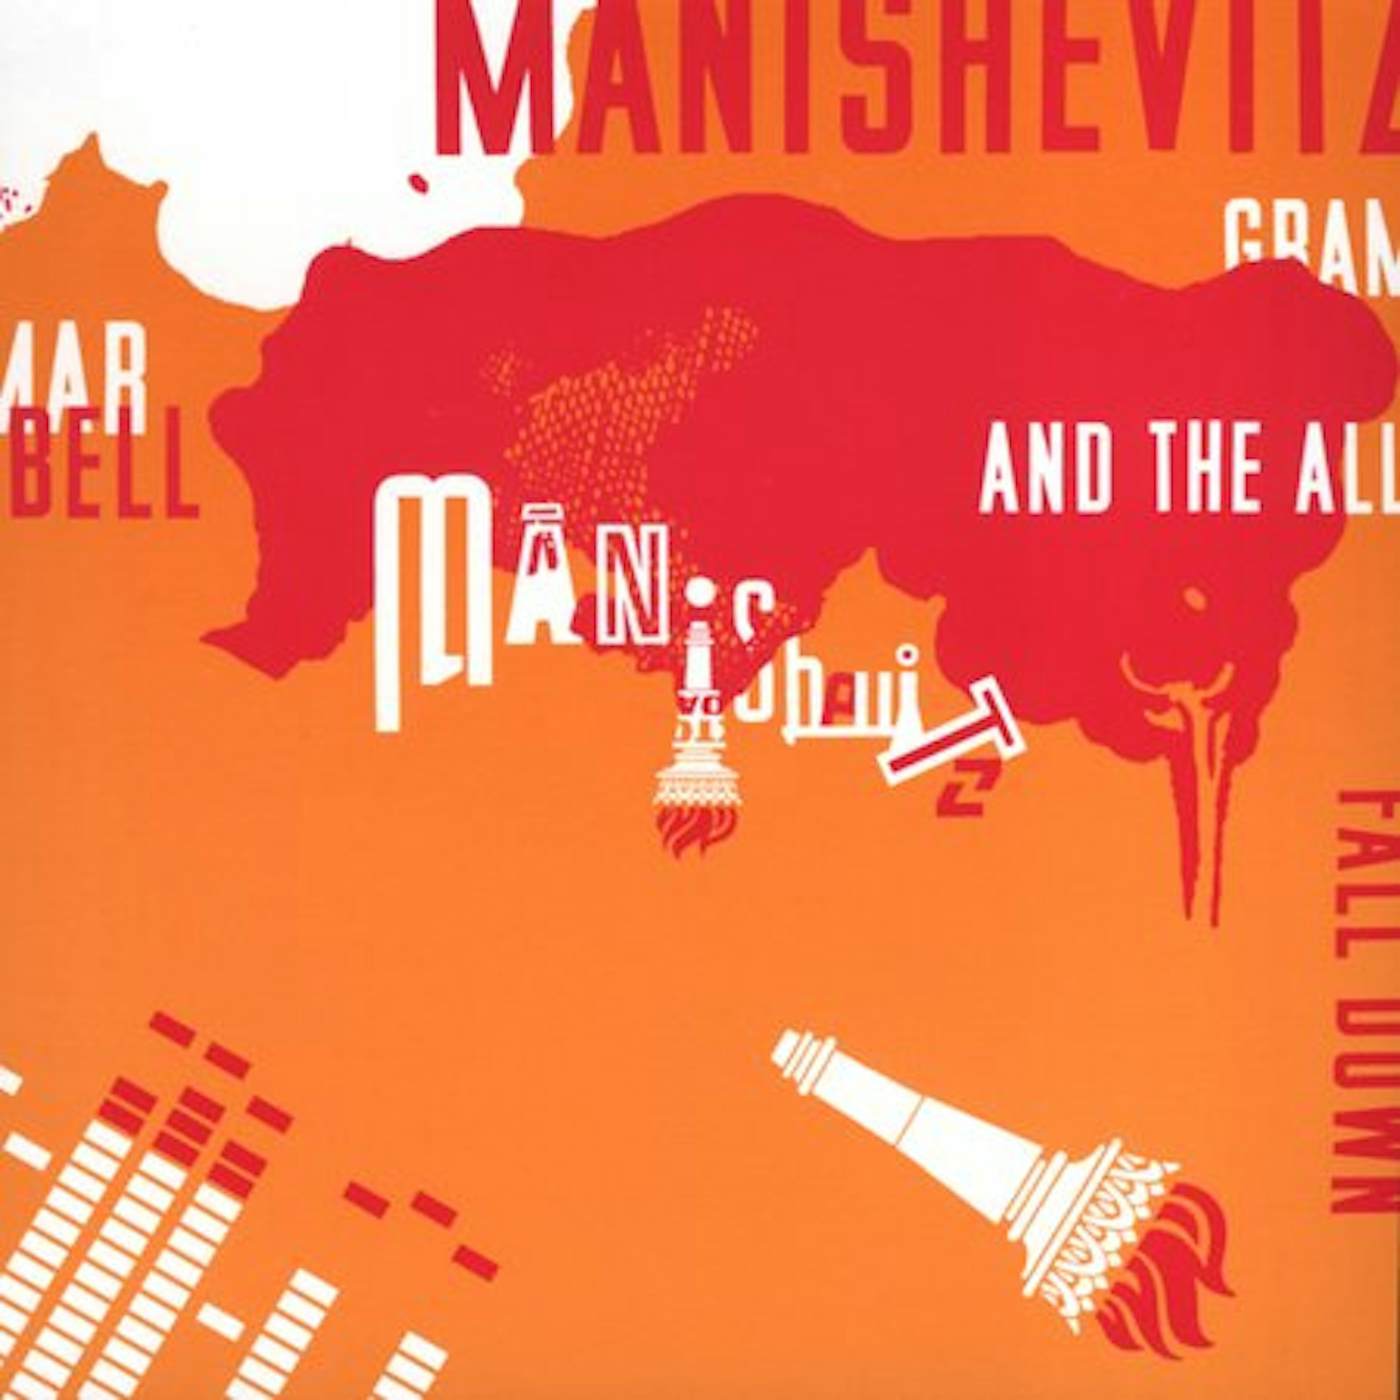 Manishevitz GRAMMAR BELL & ALL FALL DOWN CD